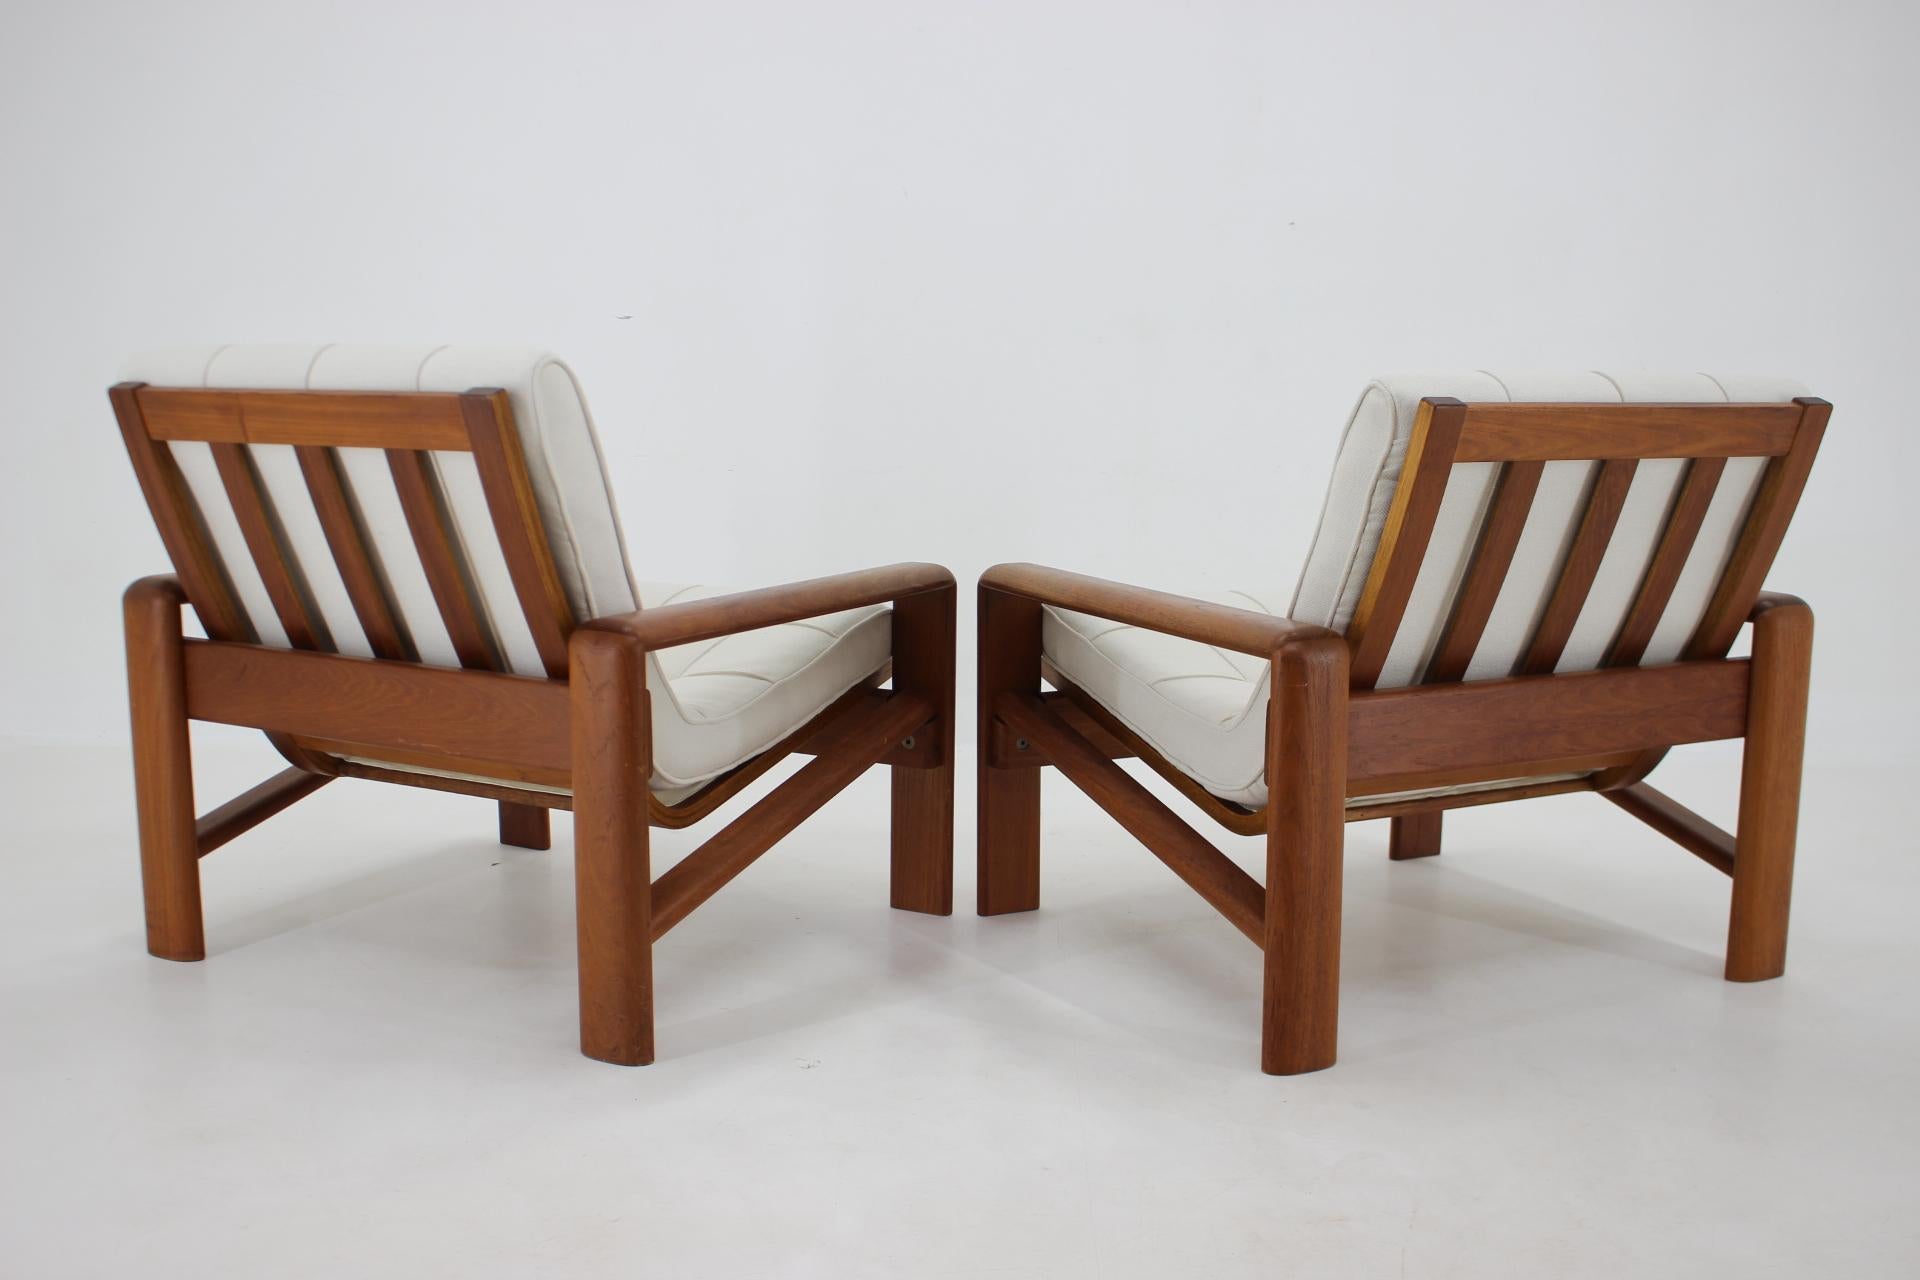 1970s Pair of Teak Armchairs by EMC Mobler, Denmark For Sale 5